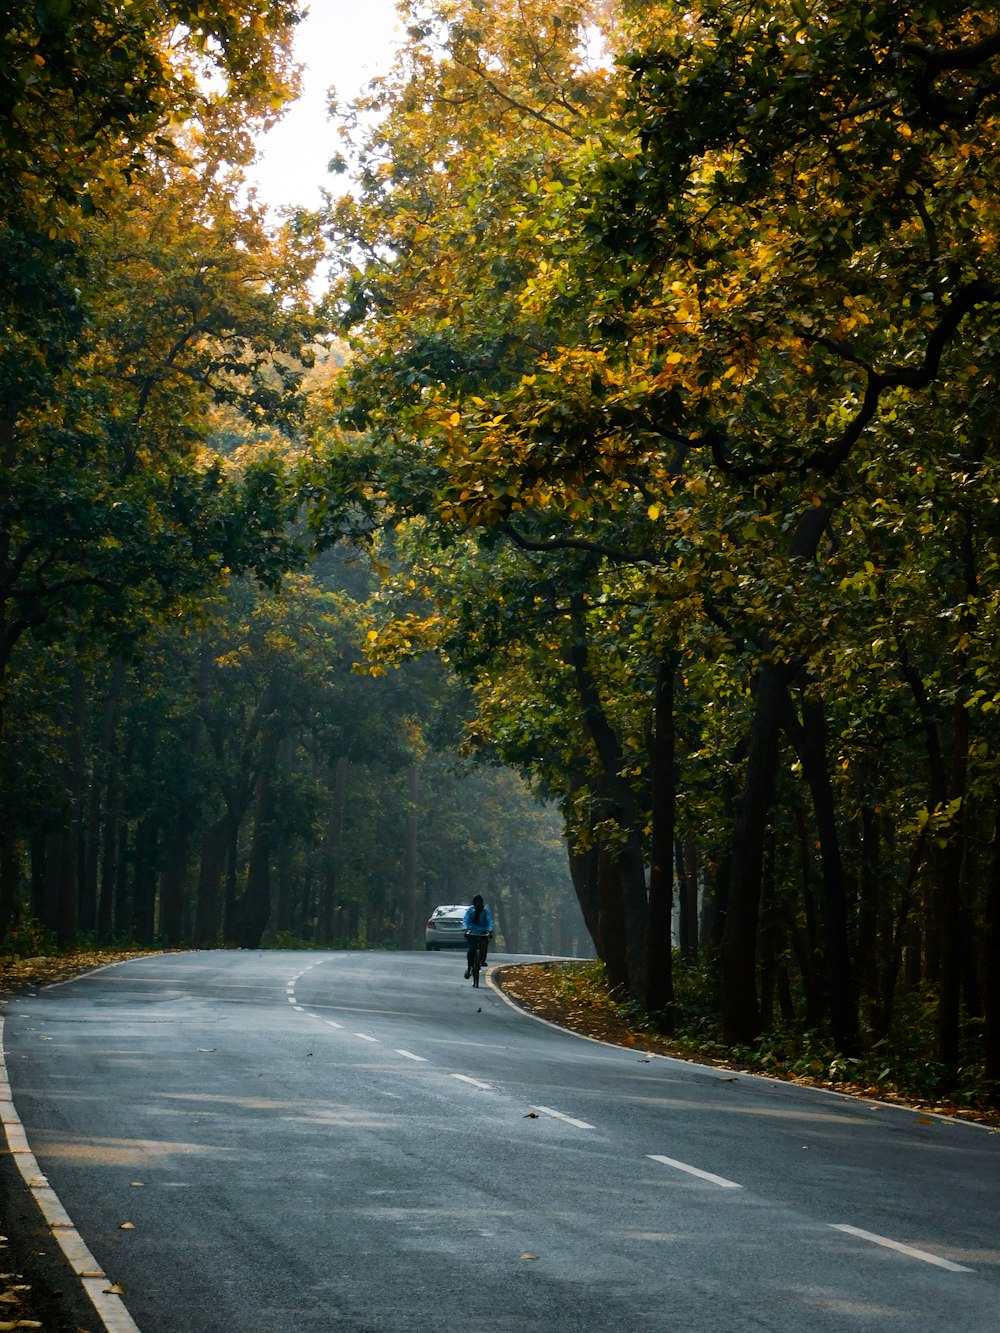 Hombre en chaqueta negra montando motocicleta en carretera de asfalto gris durante el día